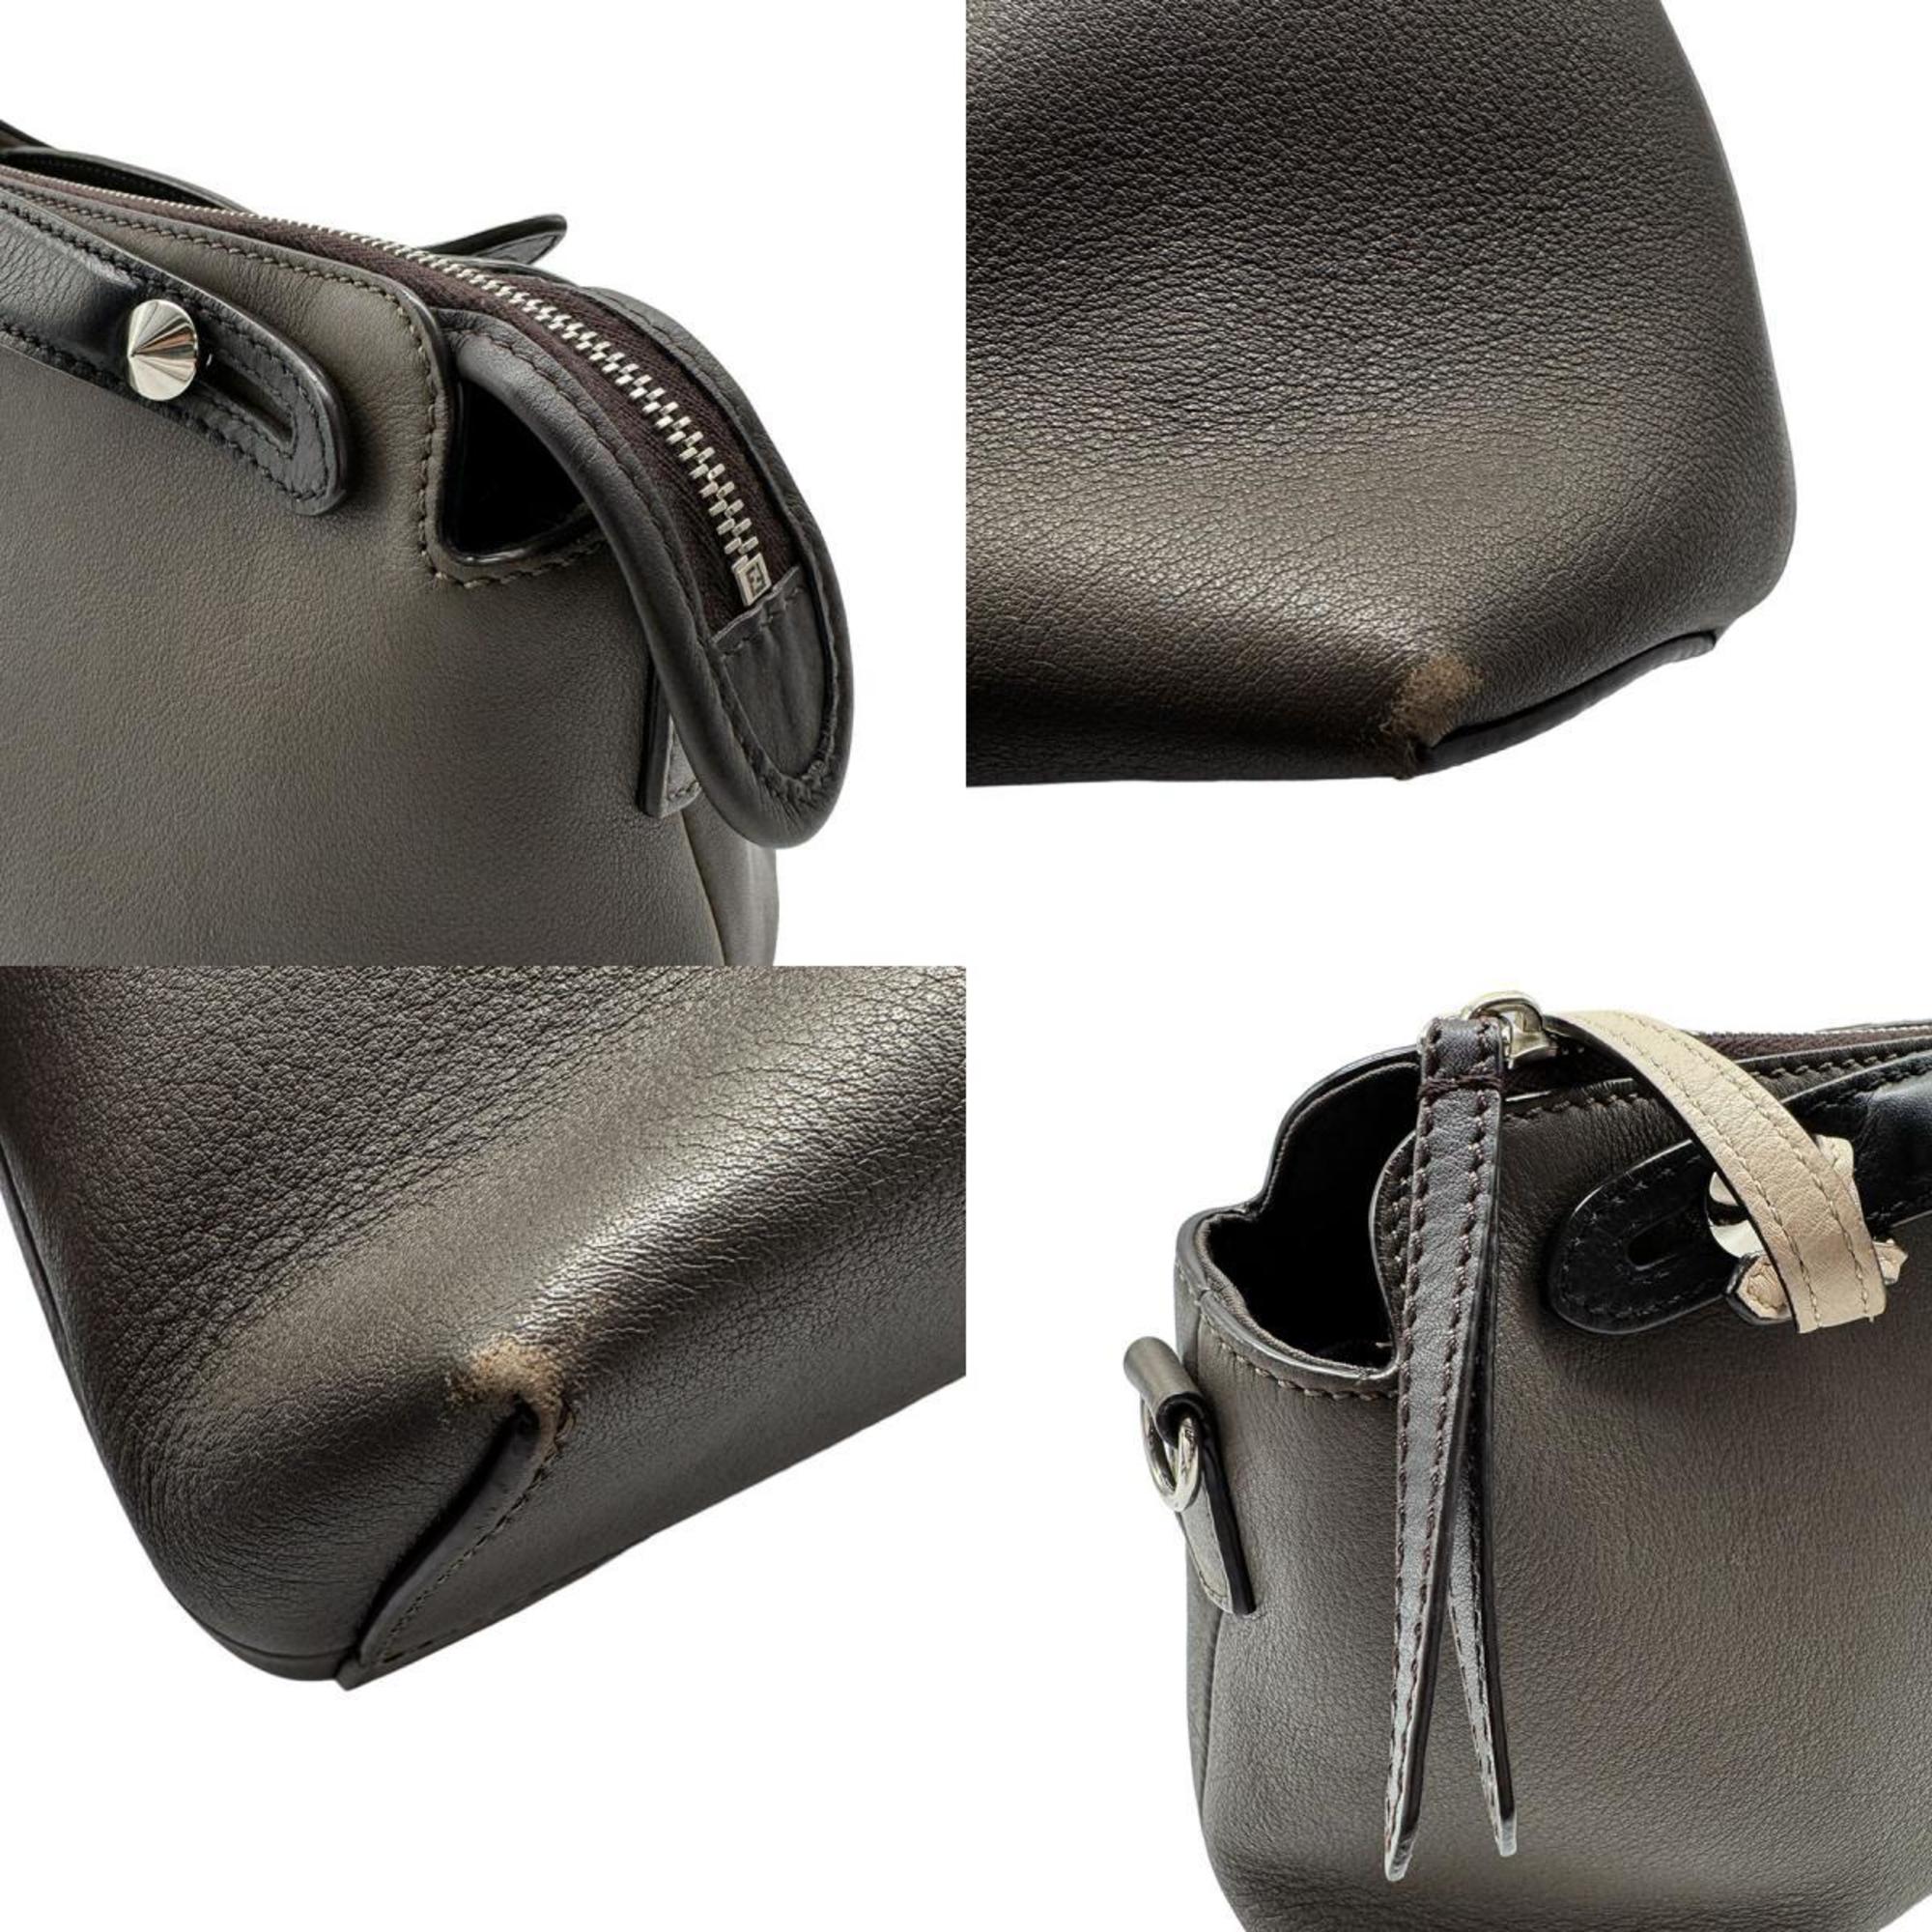 FENDI Shoulder Bag Handbag By The Way Medium Leather Gray x Black Women's 8BL124-5QJ z0513